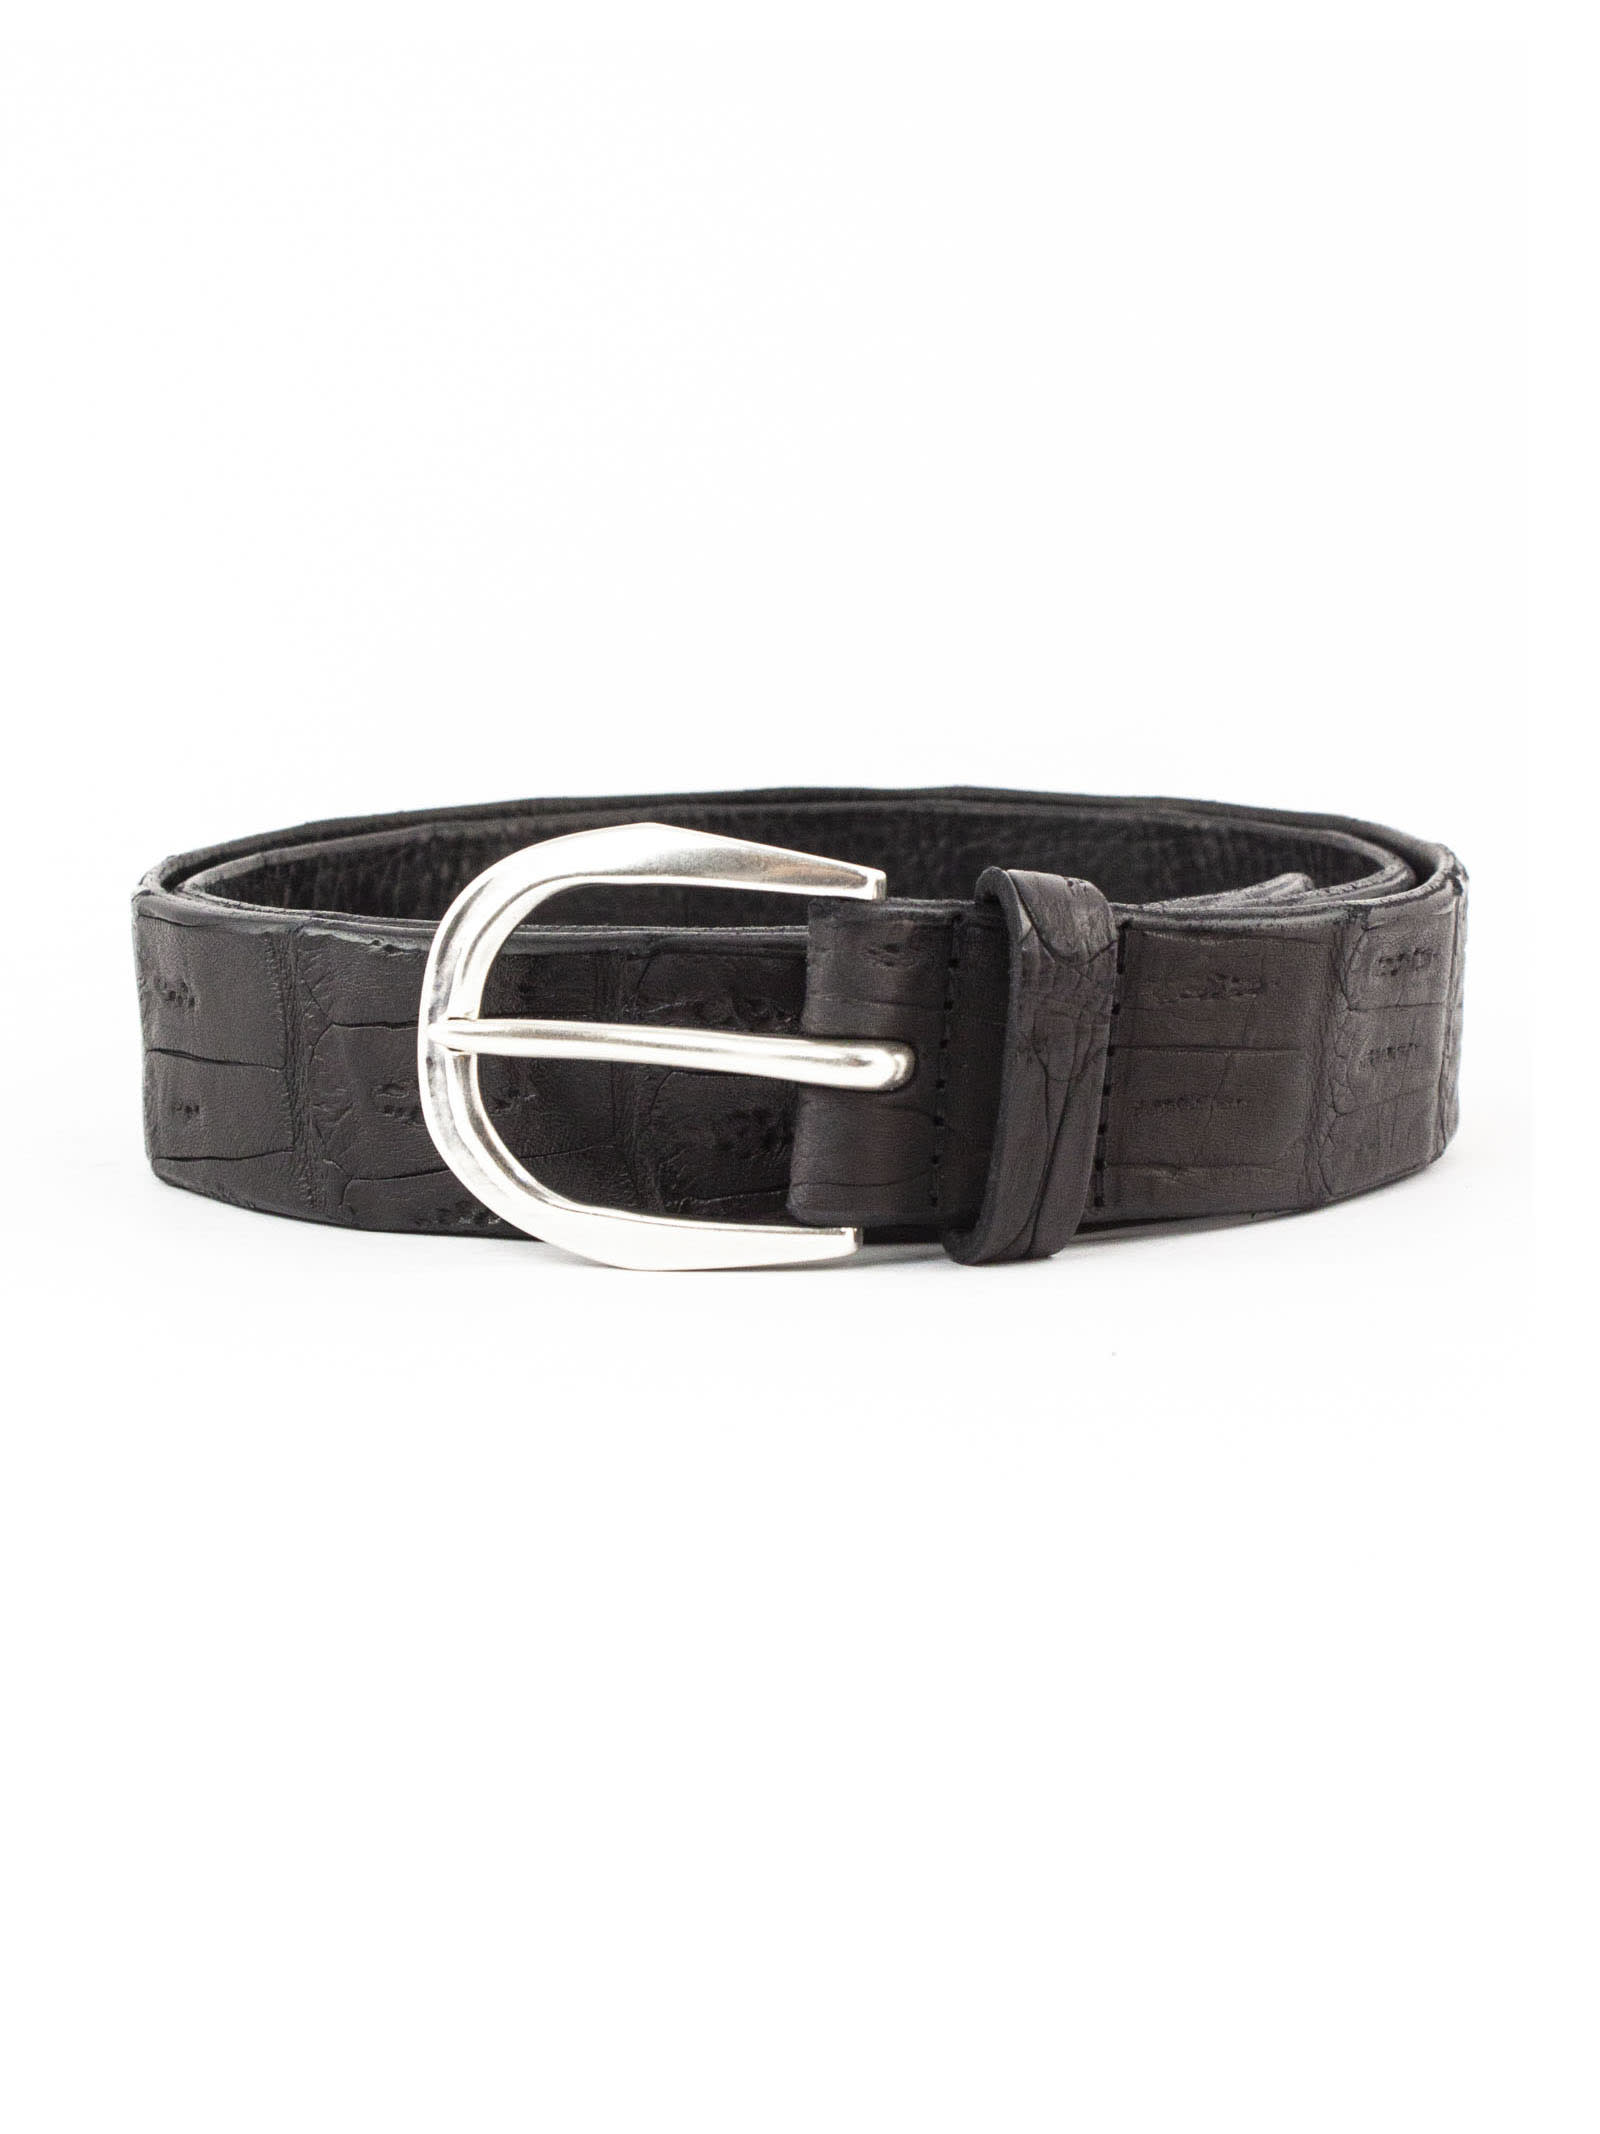 Orciani Cocco Black Leather Belt